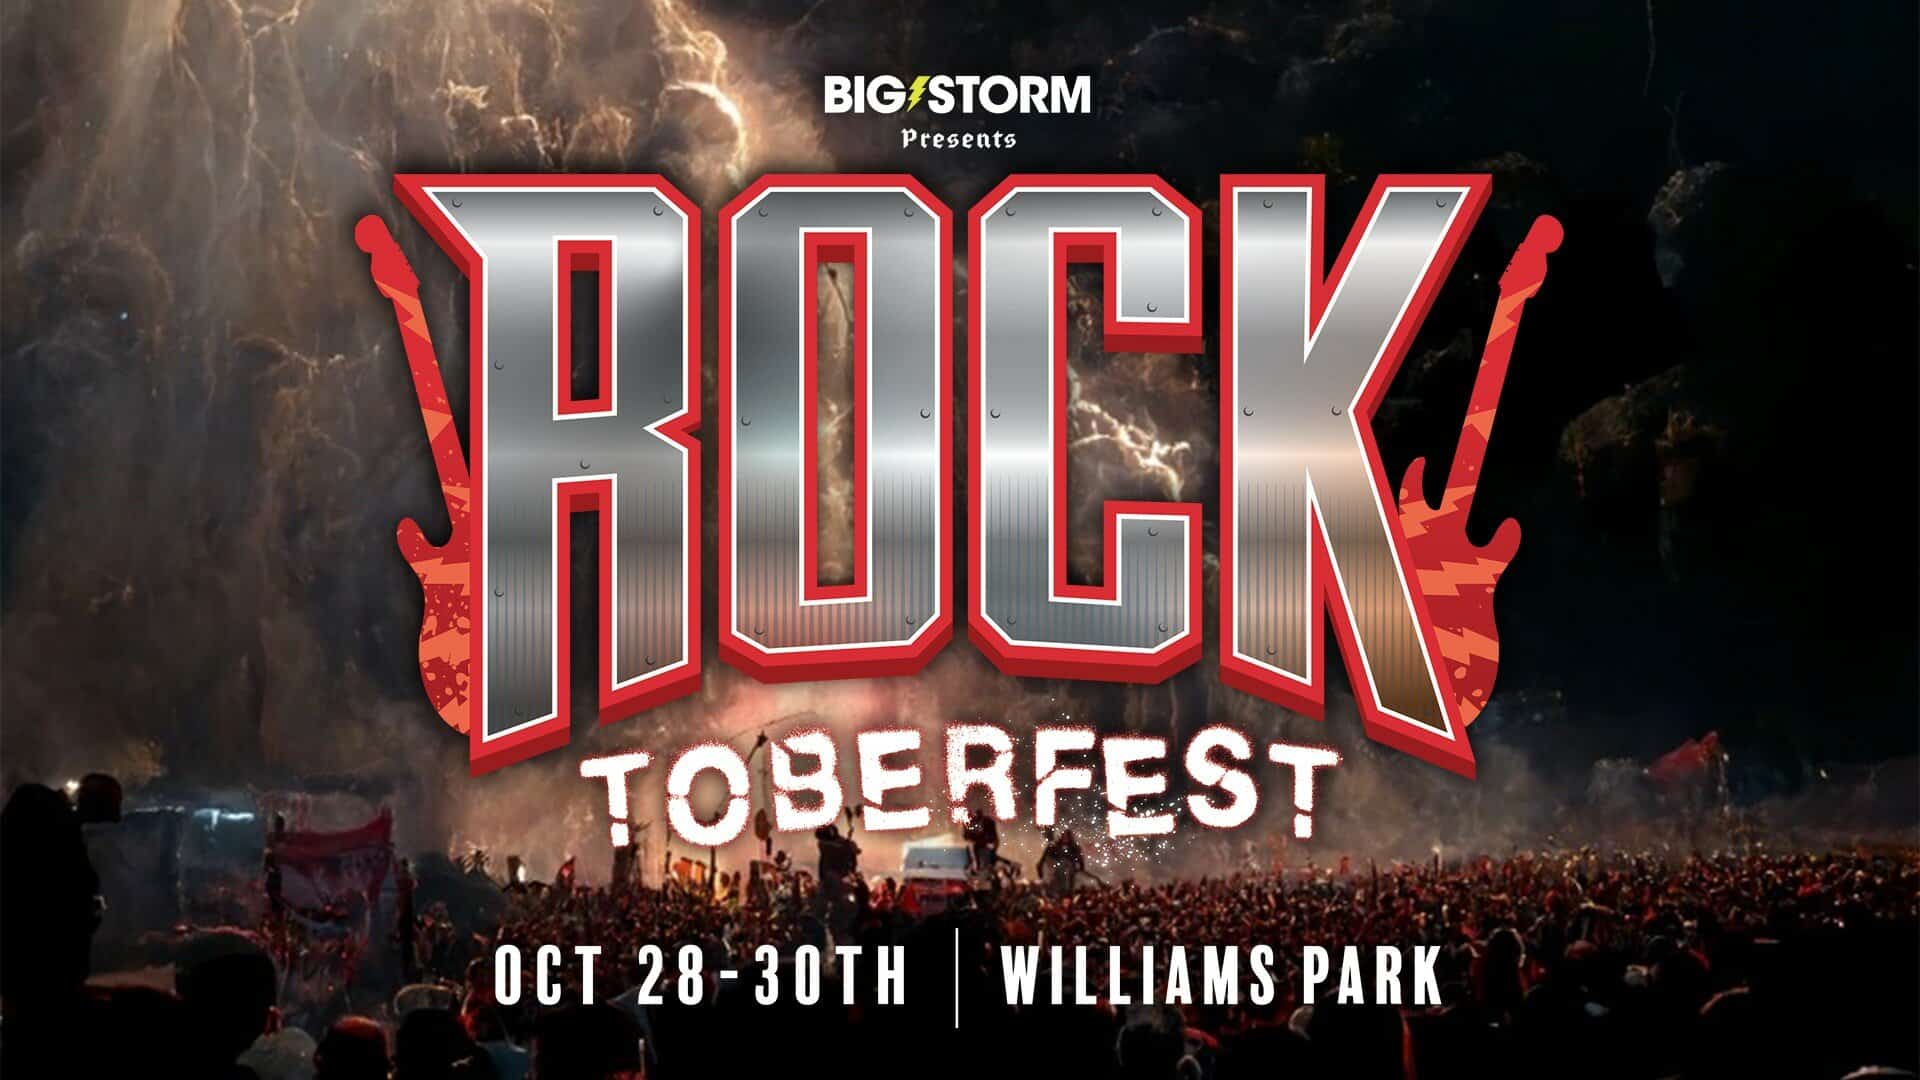 Big Storm Presents St. Pete Rocktoberfest Halloween Weekend at Williams Park